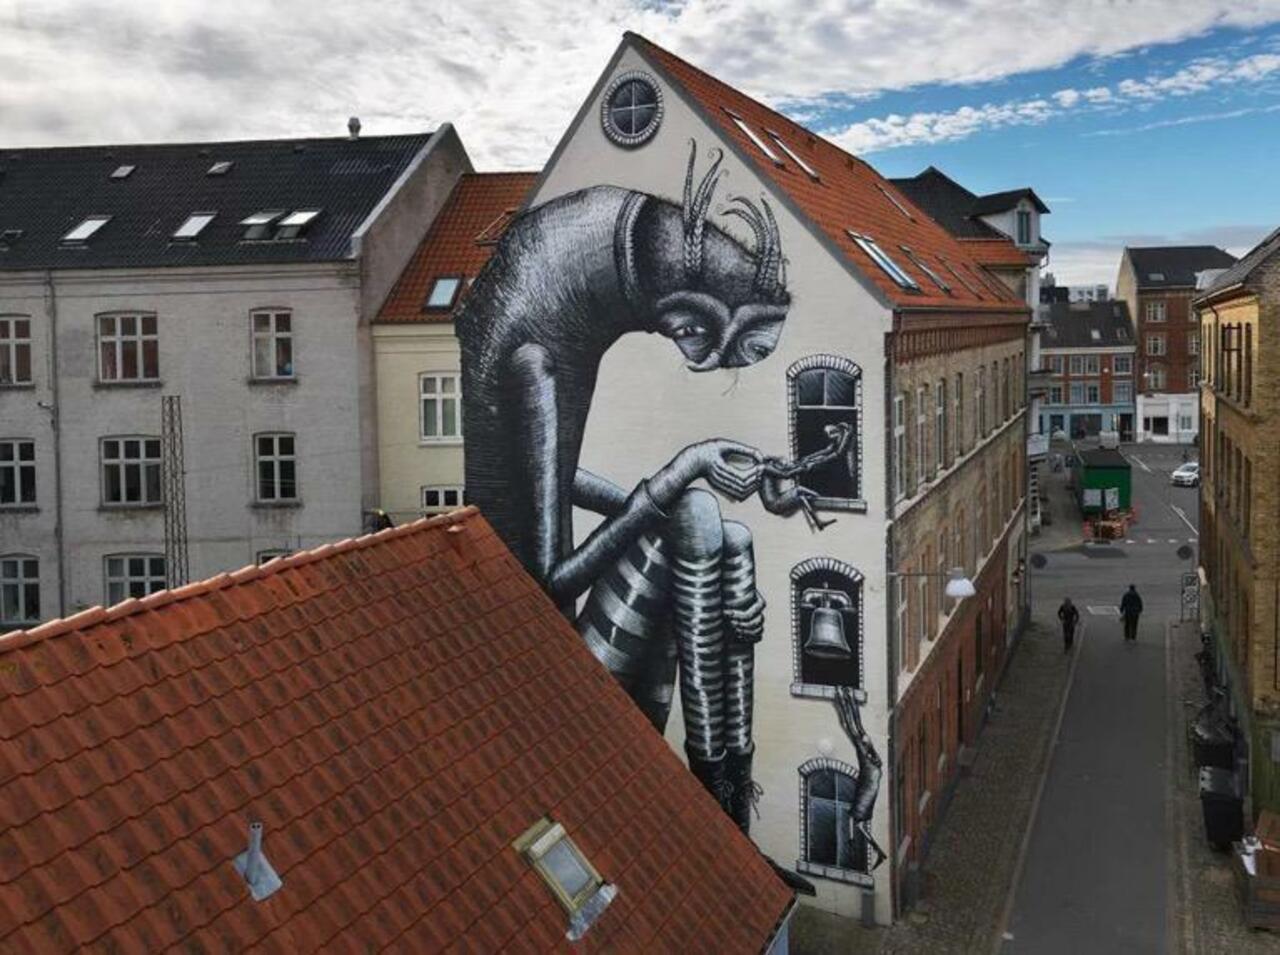 RT @AuKeats: #streetart by #phlegm #sweden #switch #graffiti #bedifferent #art #art http://t.co/7fGQ7qHKFG